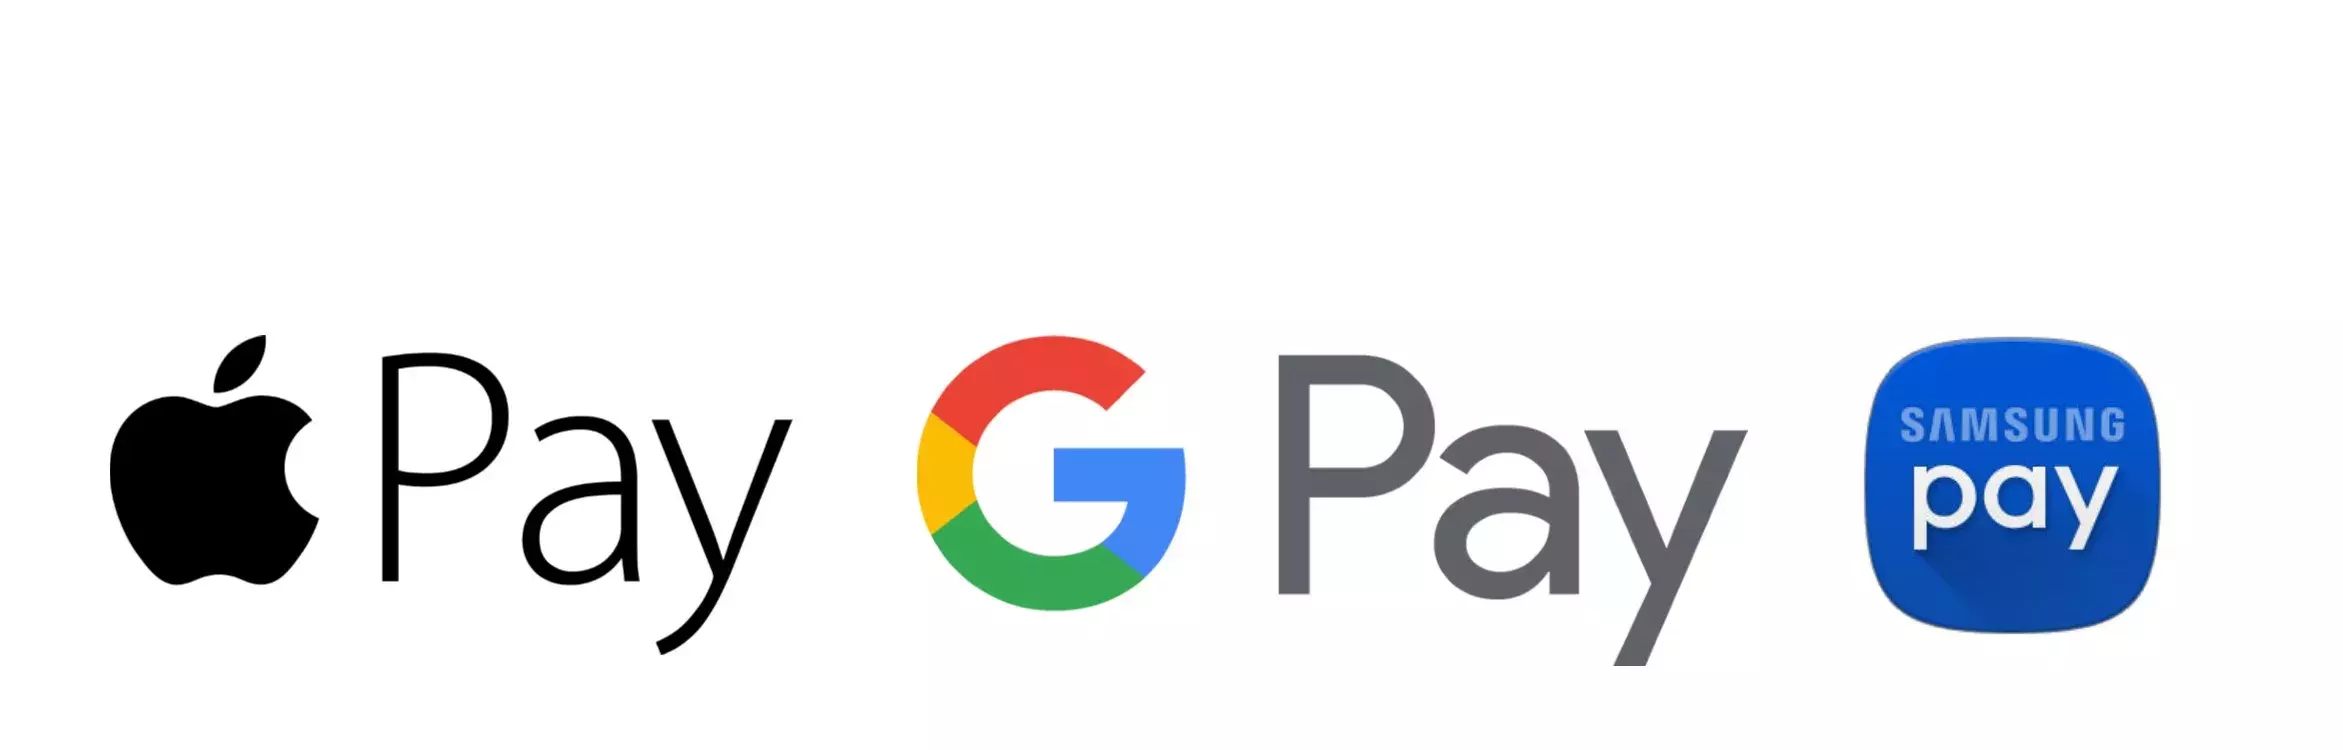 File:Google Pay Send logo (2018-2020).svg - Wikipedia